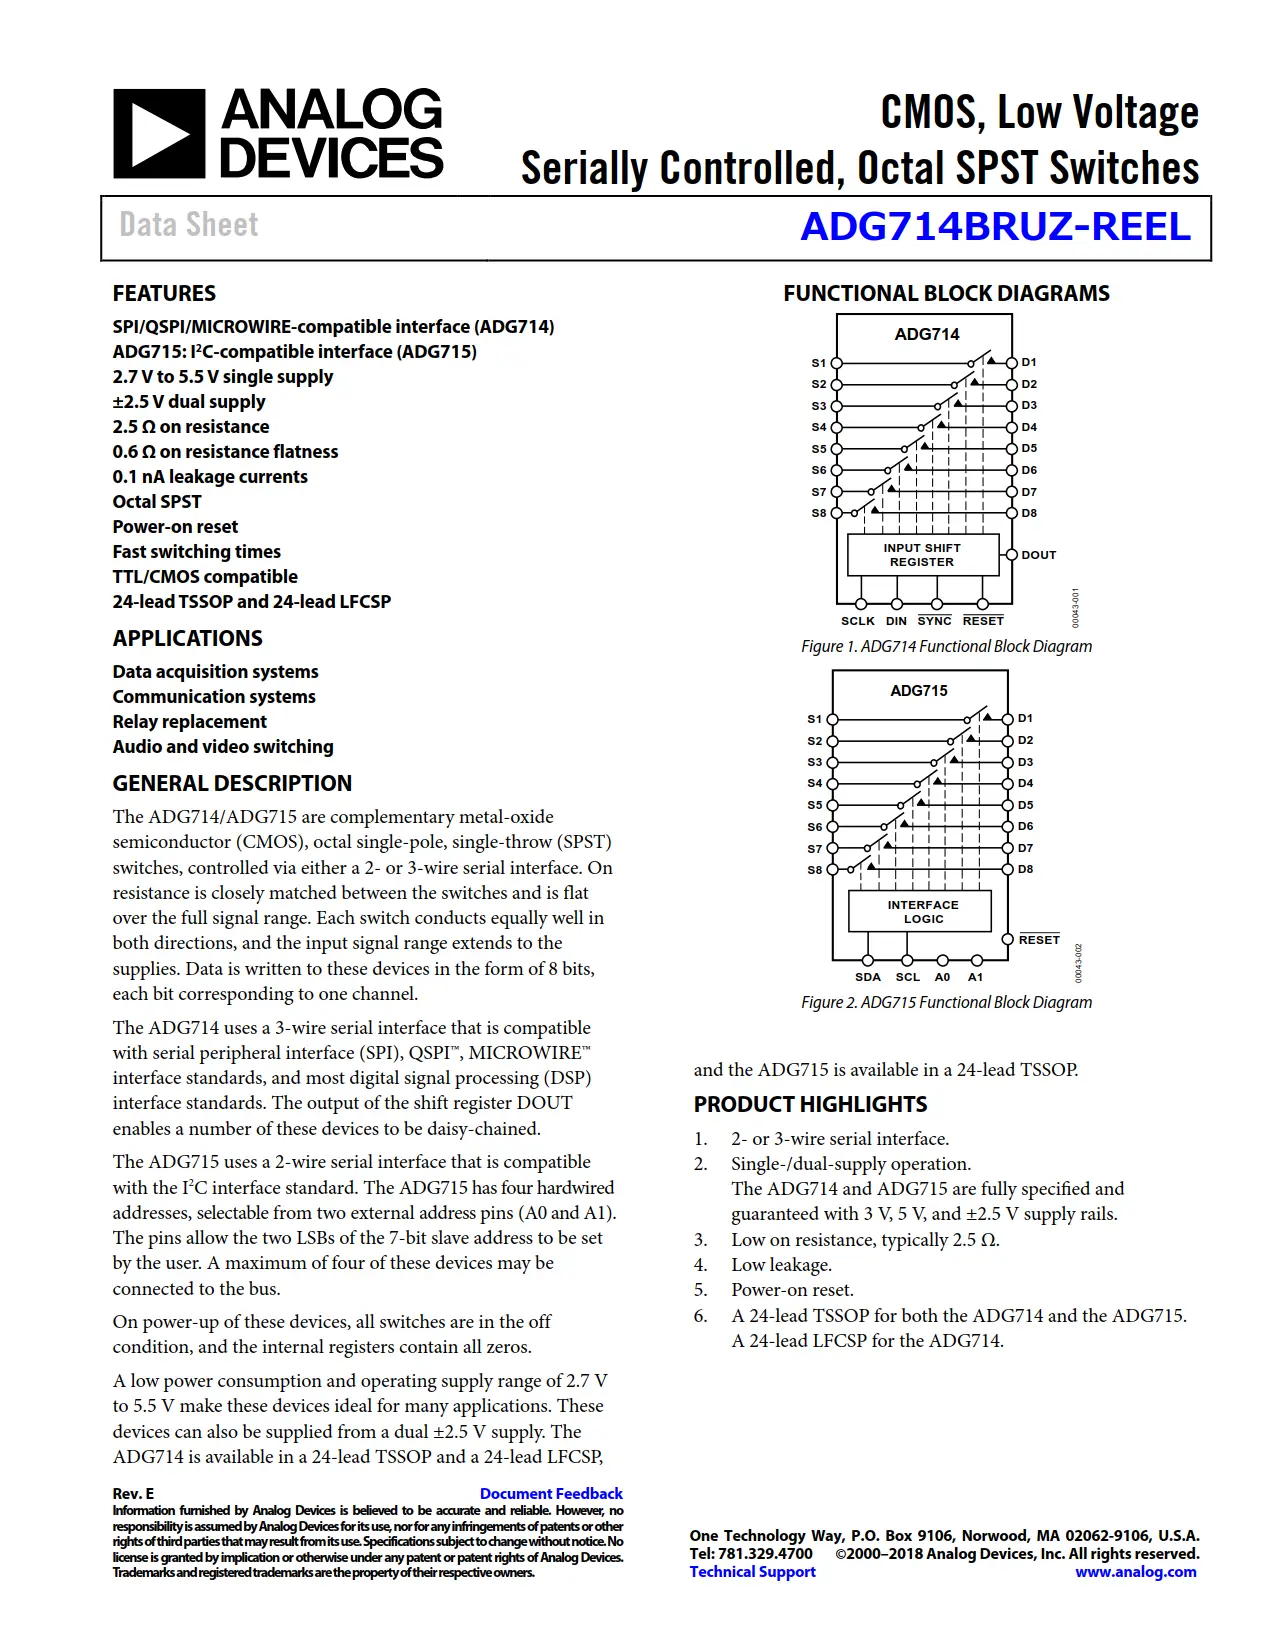 ADG714BRUZ-REEL DataSheet